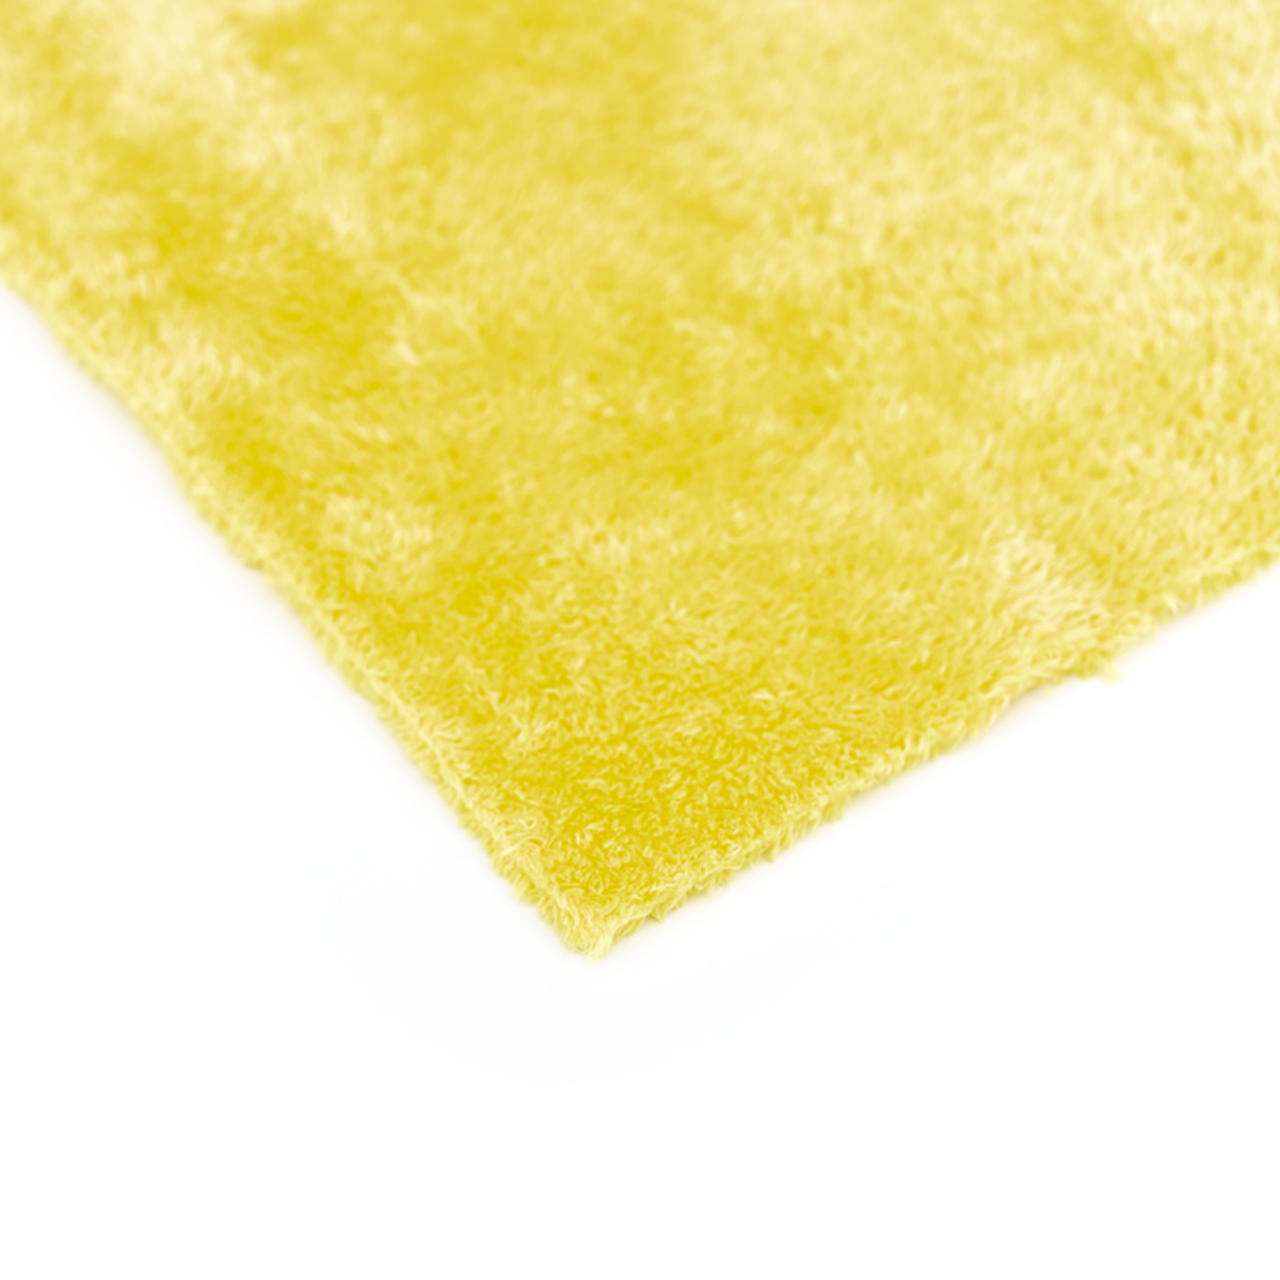 The Rag Company Eagle Edgeless 350 16 x 16 Plush Microfiber Towel - Yellow